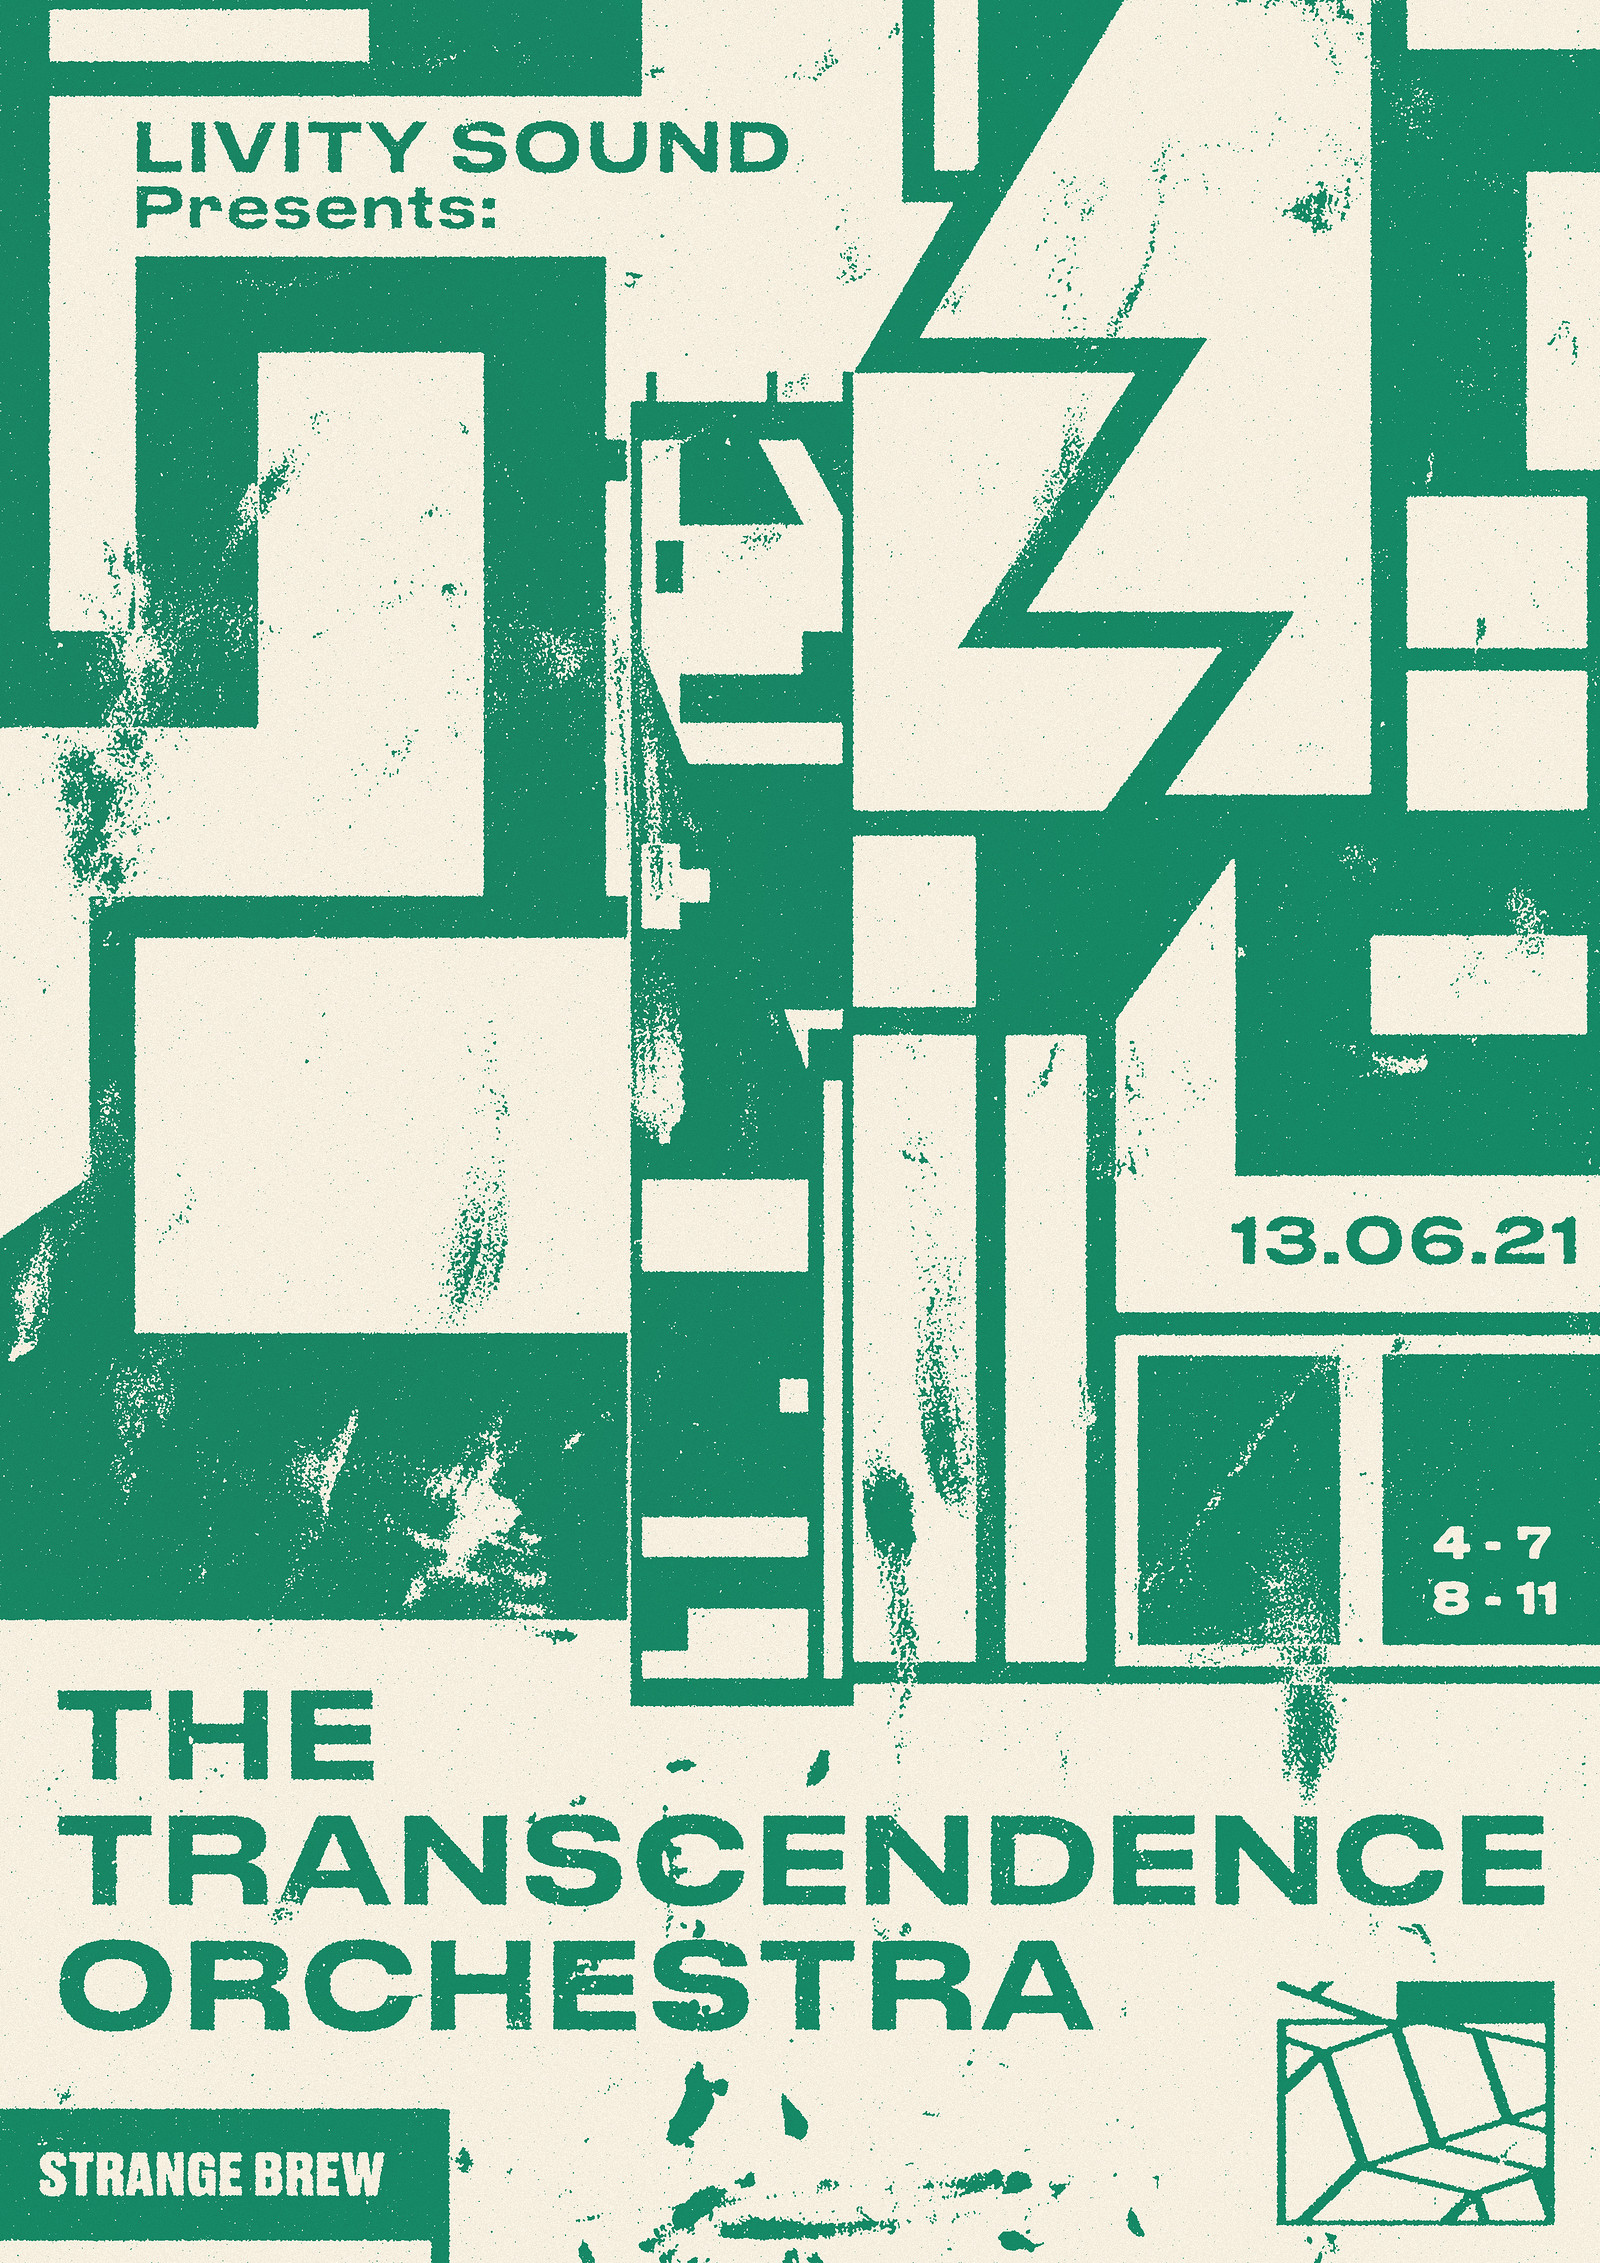 Livity Sound presents The Transcendence Orchestra at Strange Brew